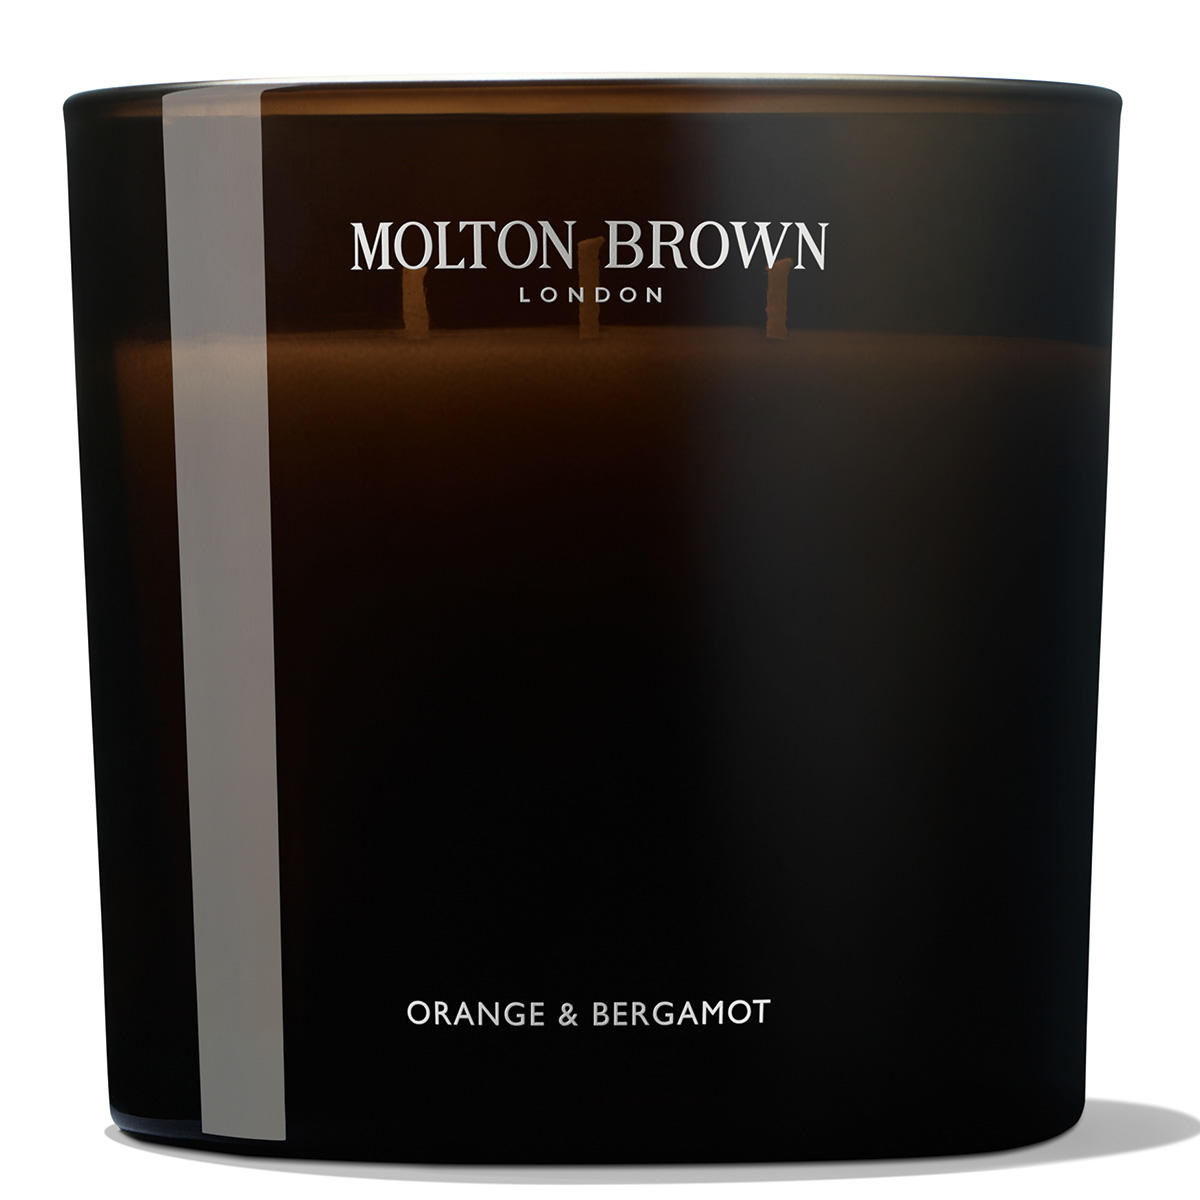 MOLTON BROWN Orange & Bergamot Scented Candle 600 g - 2